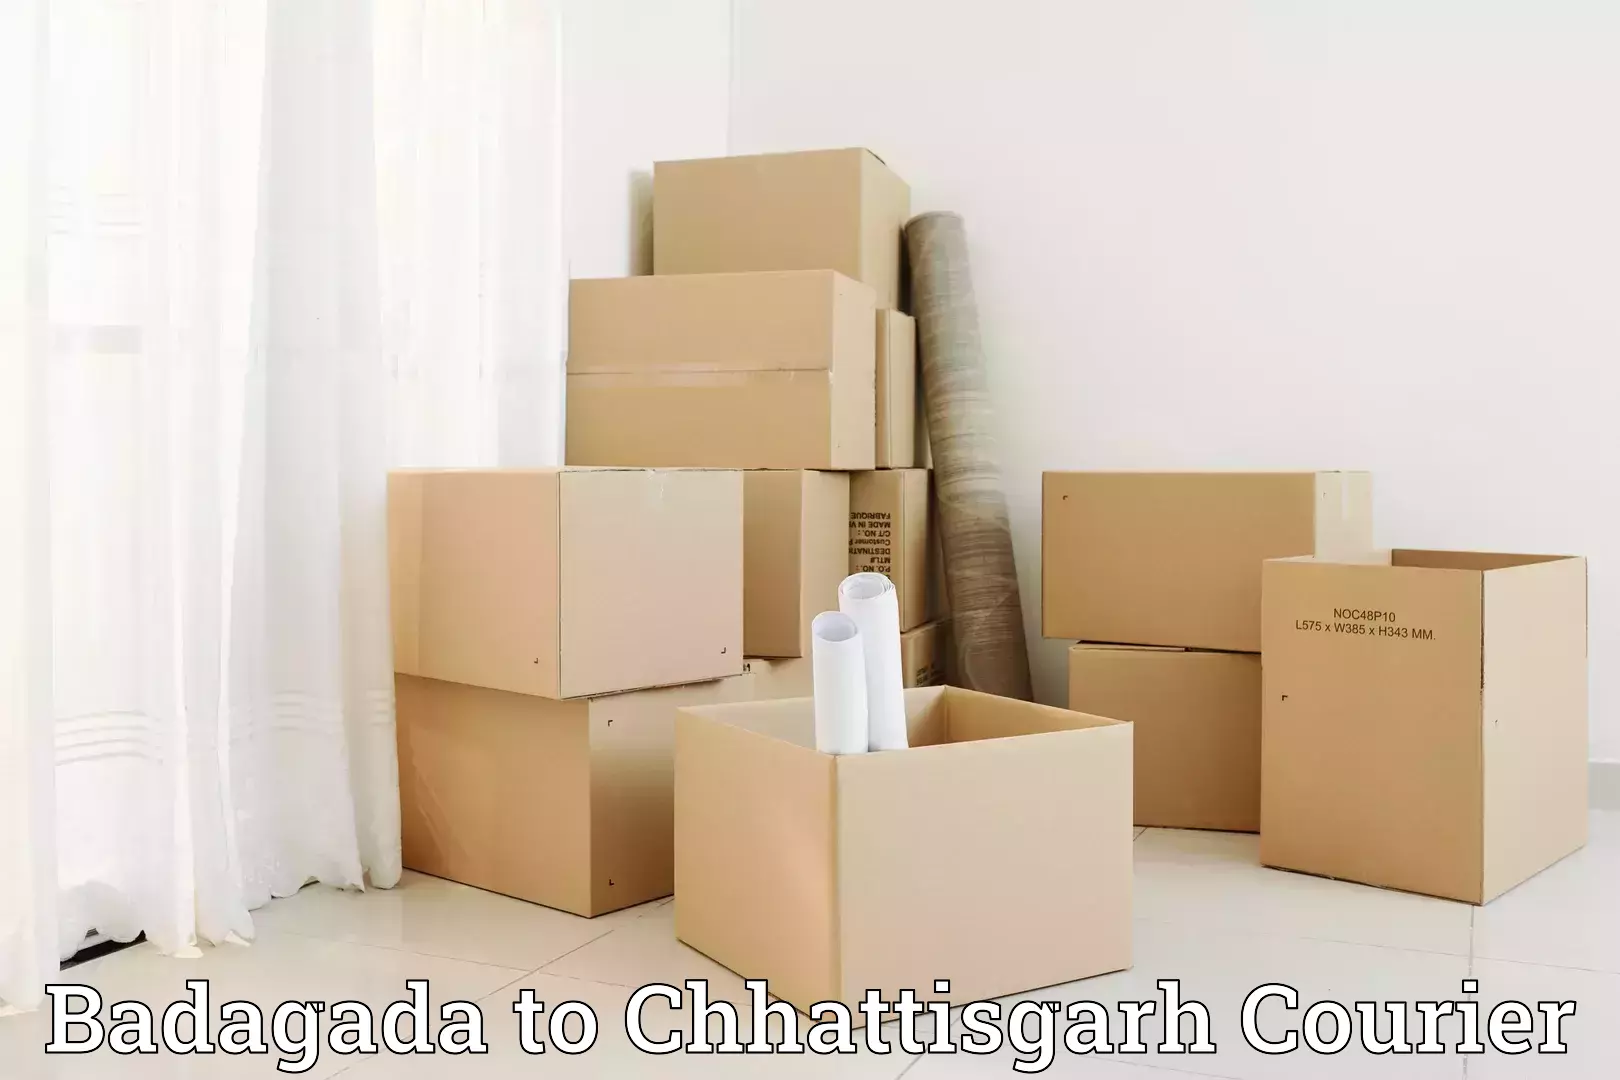 Hassle-free relocation Badagada to Patna Chhattisgarh